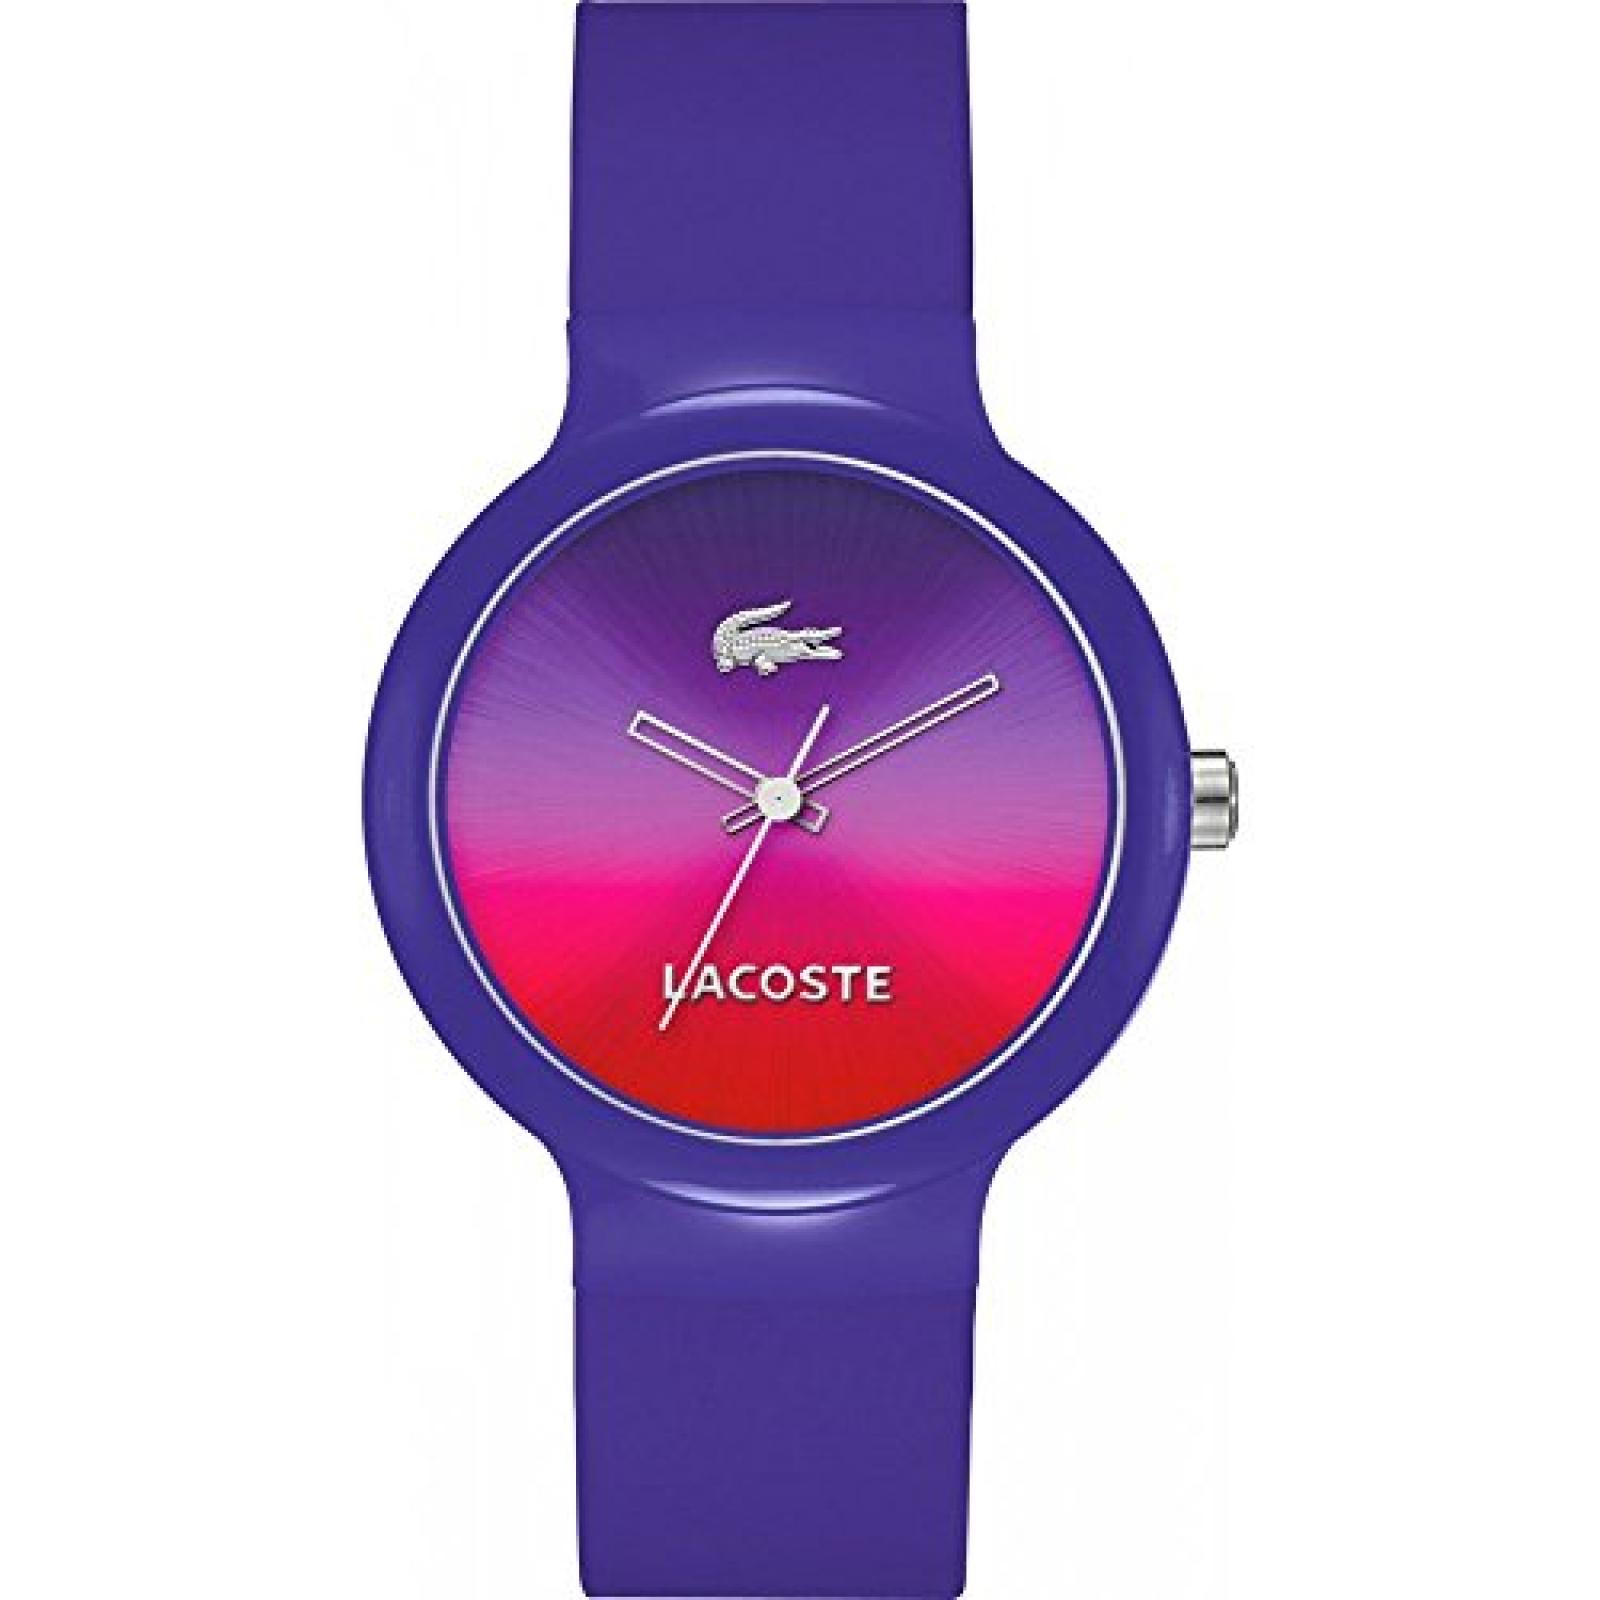 Lacoste Damen-Armbanduhr GOA Analog Quarz Silikon lila 2020079 